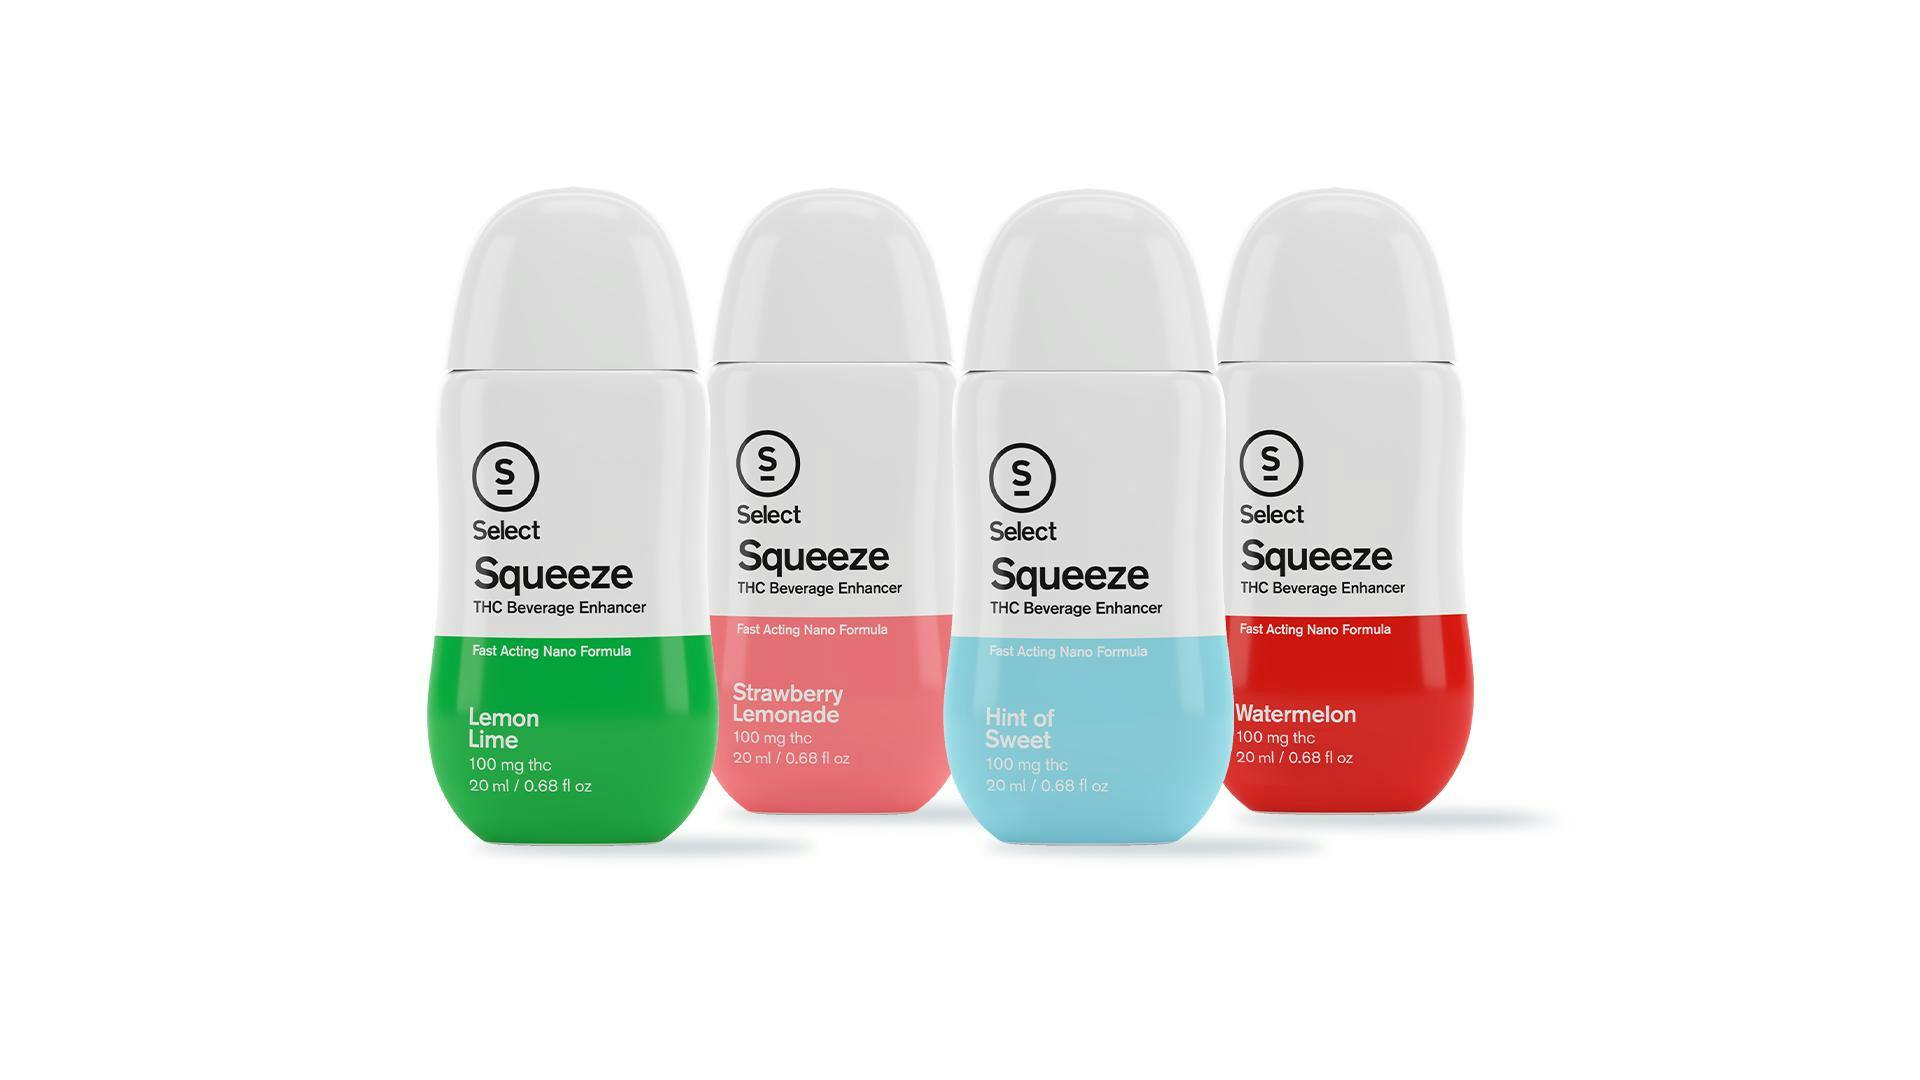 Best Beverage Enhancer: Select Squeeze